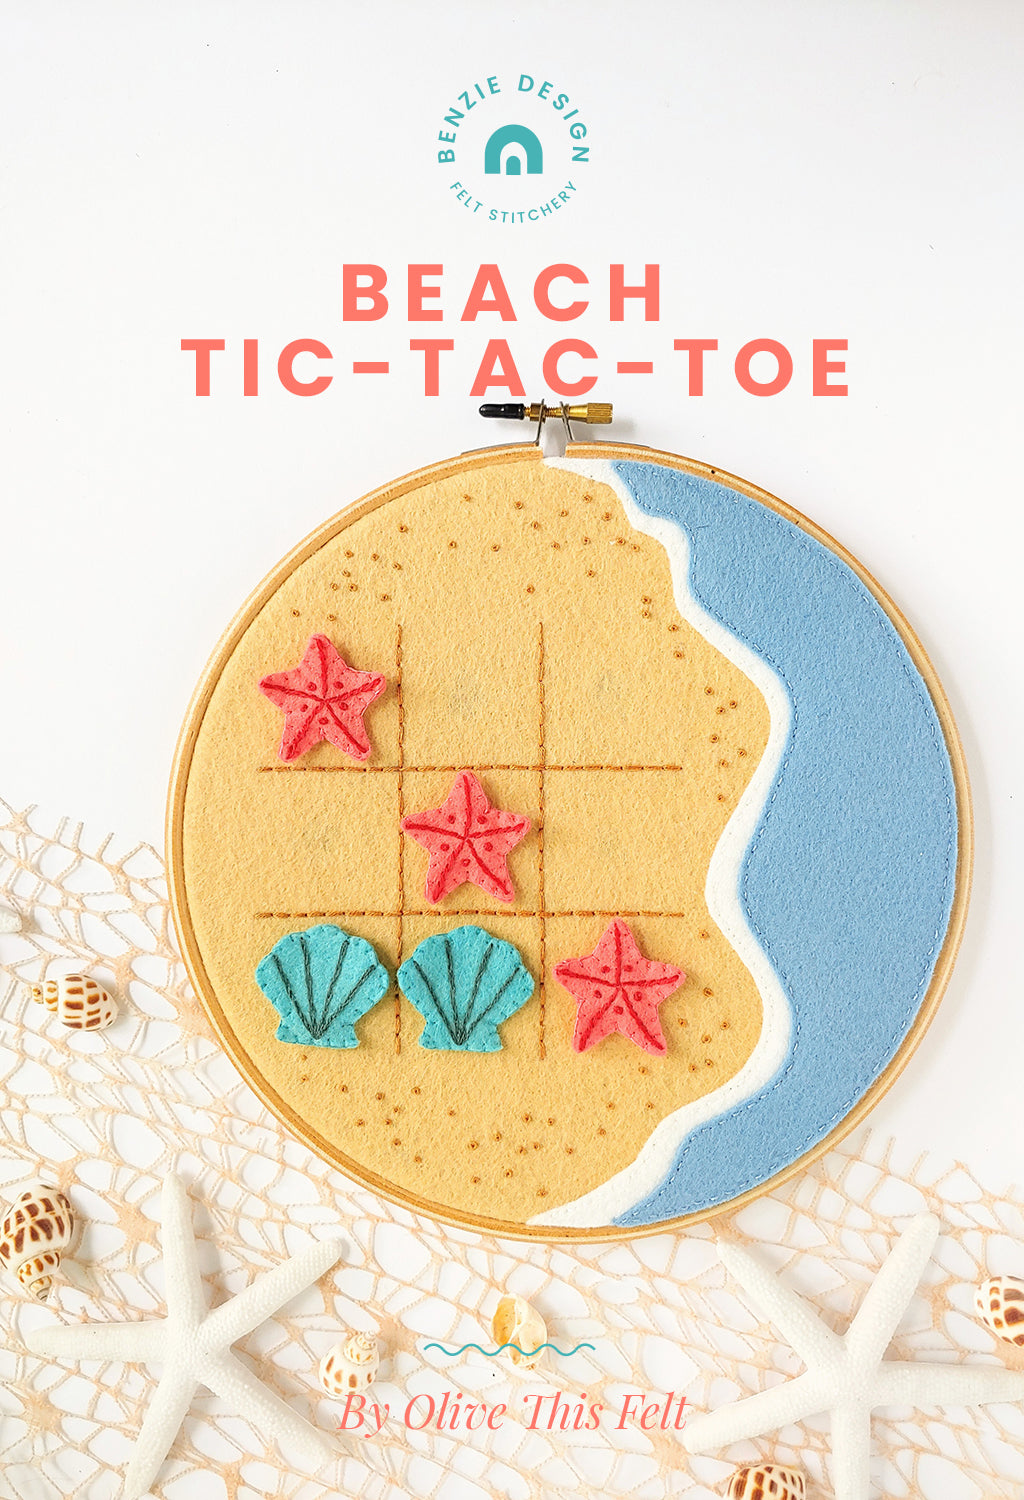 Tic-Tac-Toe Game – Benzie Design